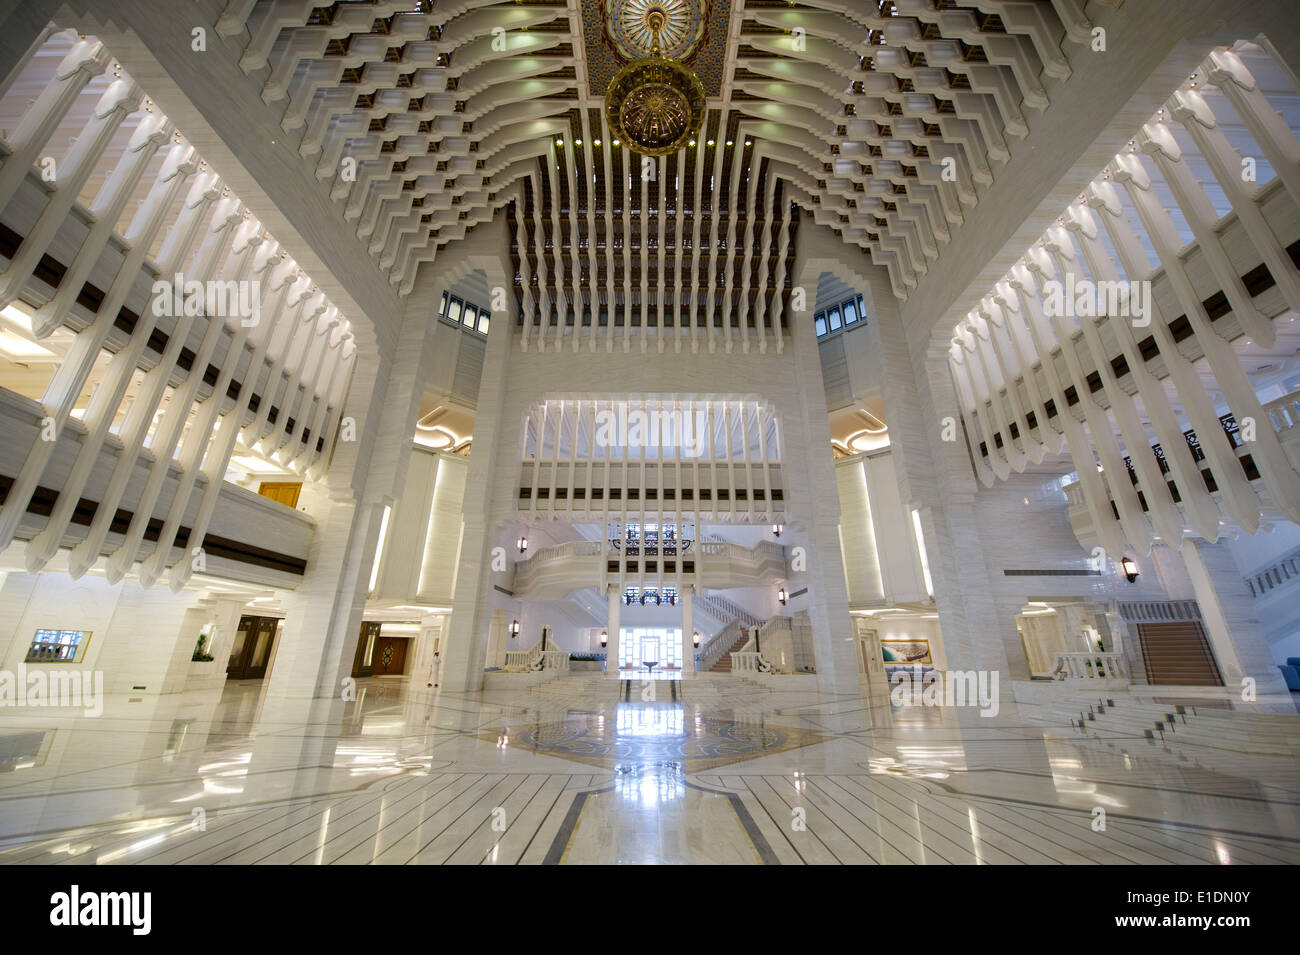 Image result for tamim bin hamad al thani palace